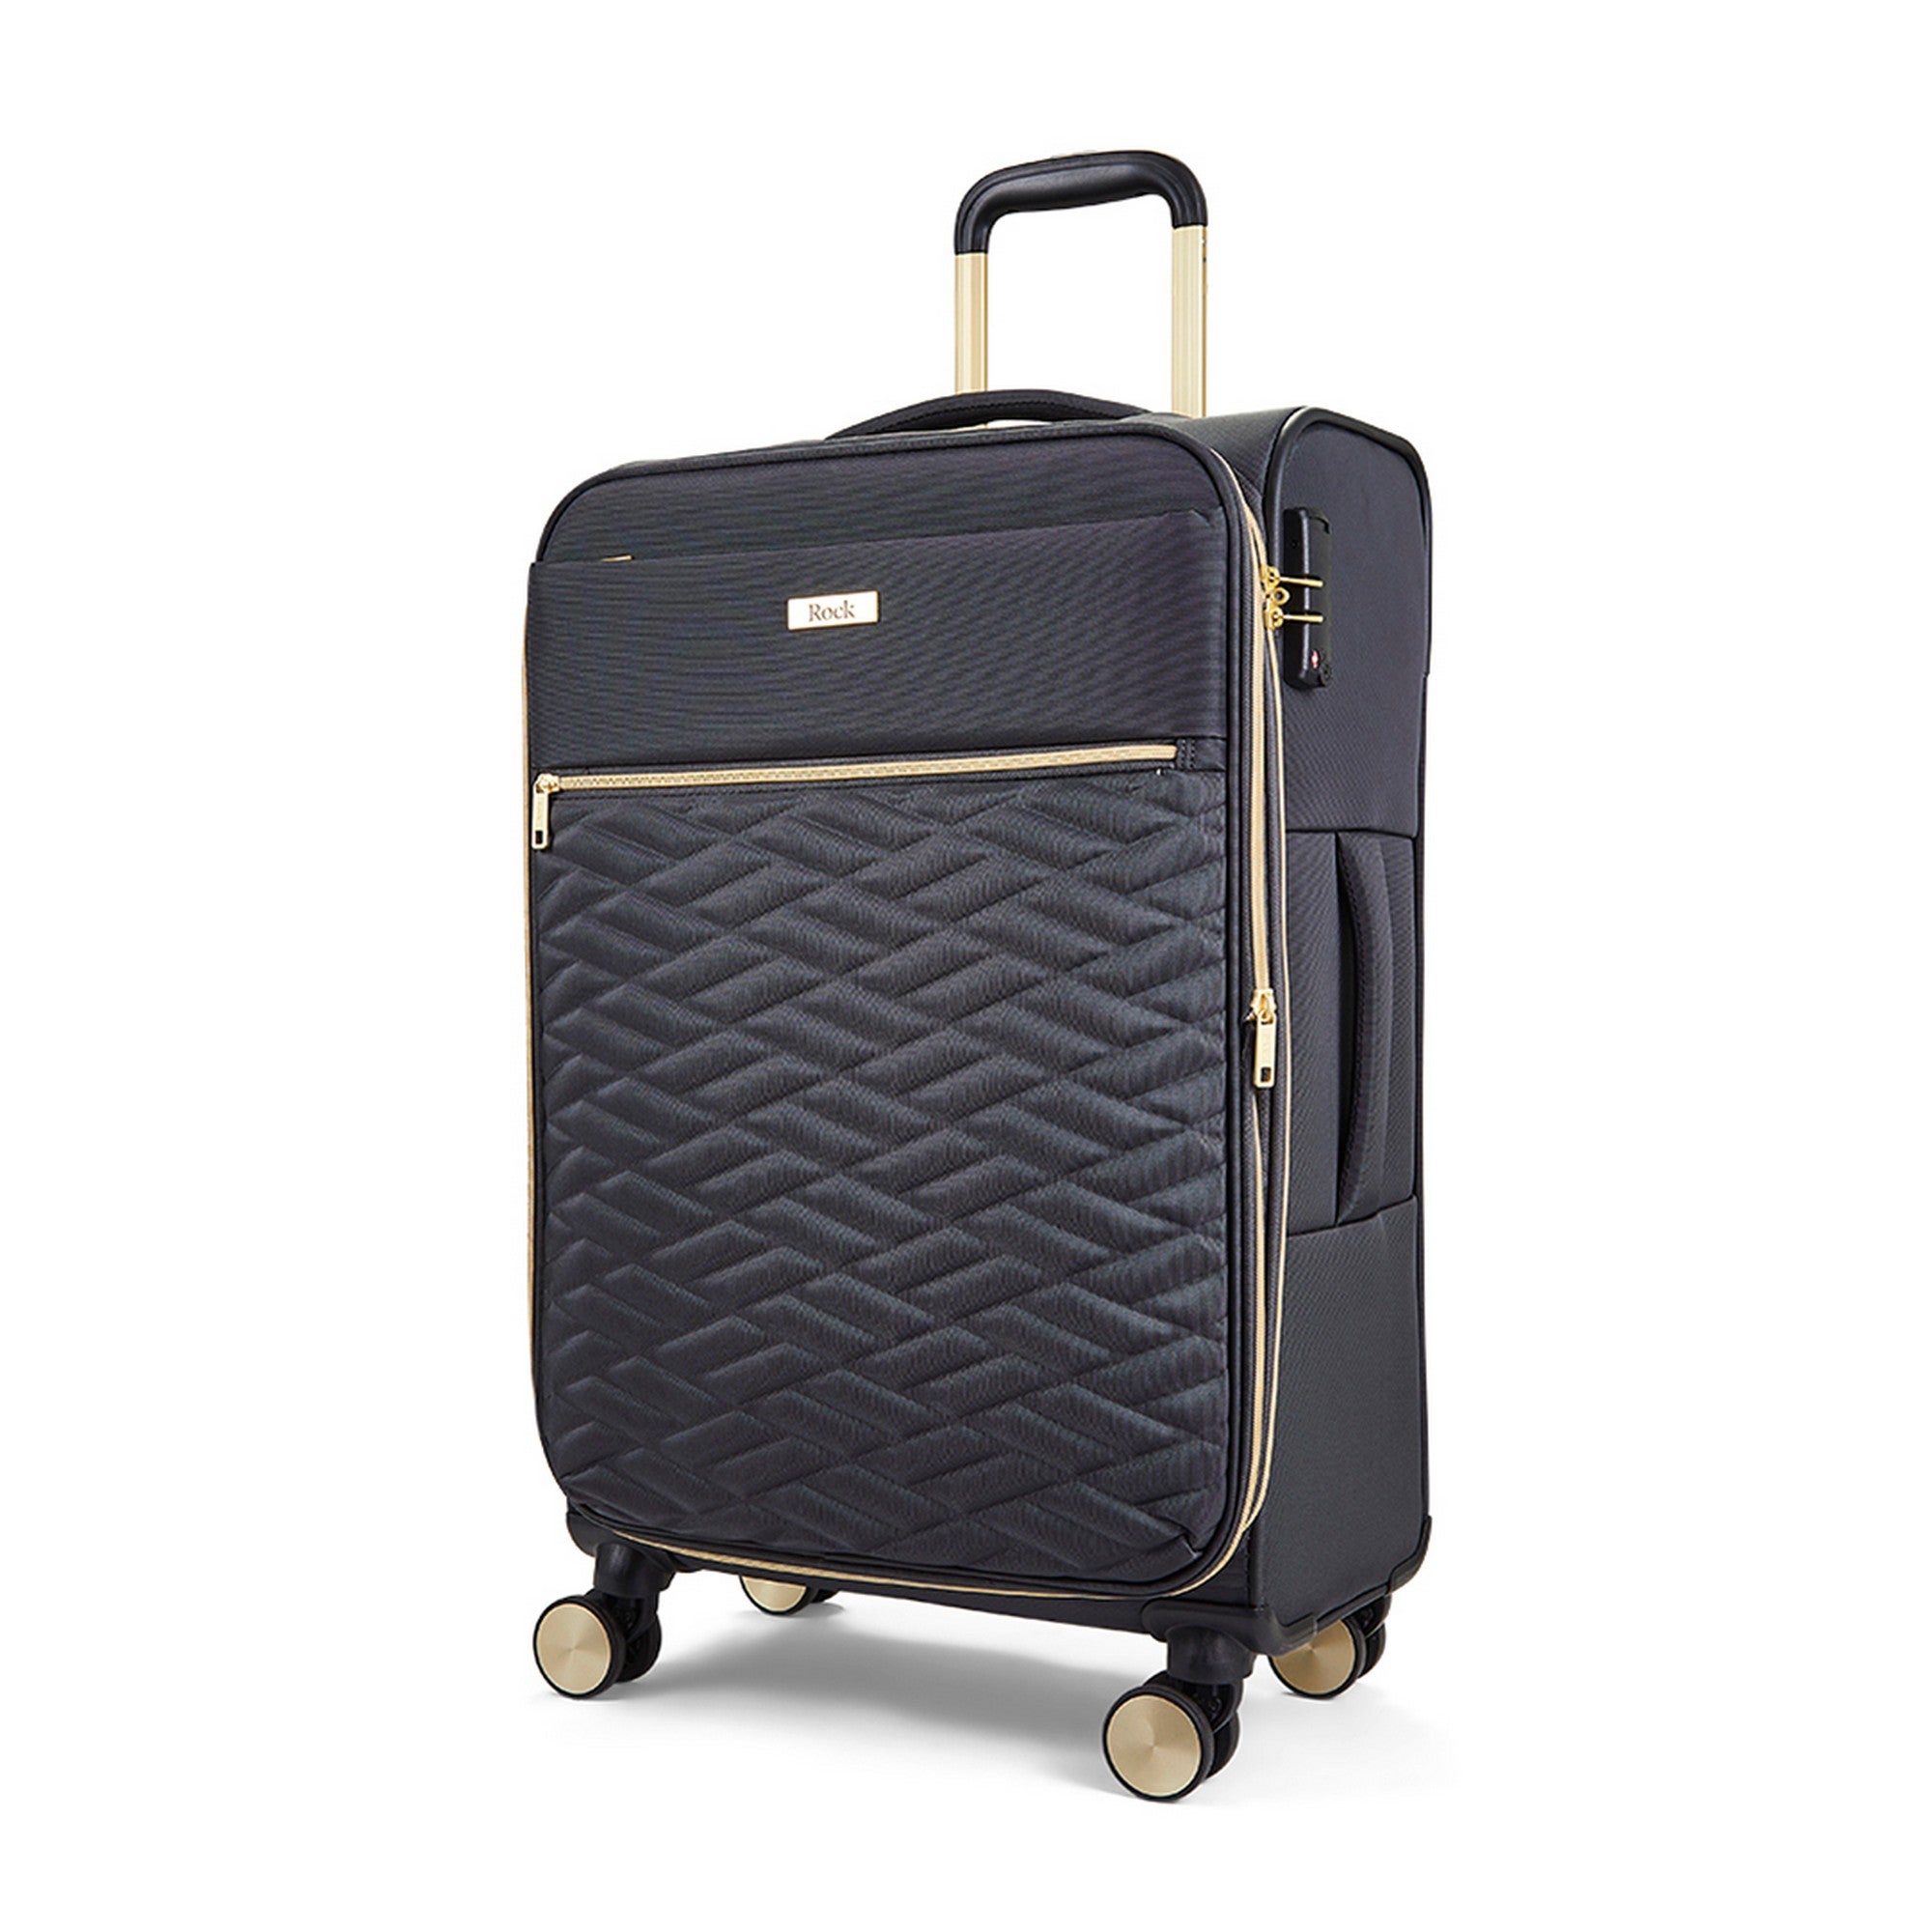 Rock Luggage Sloane Suitcase Charcoal